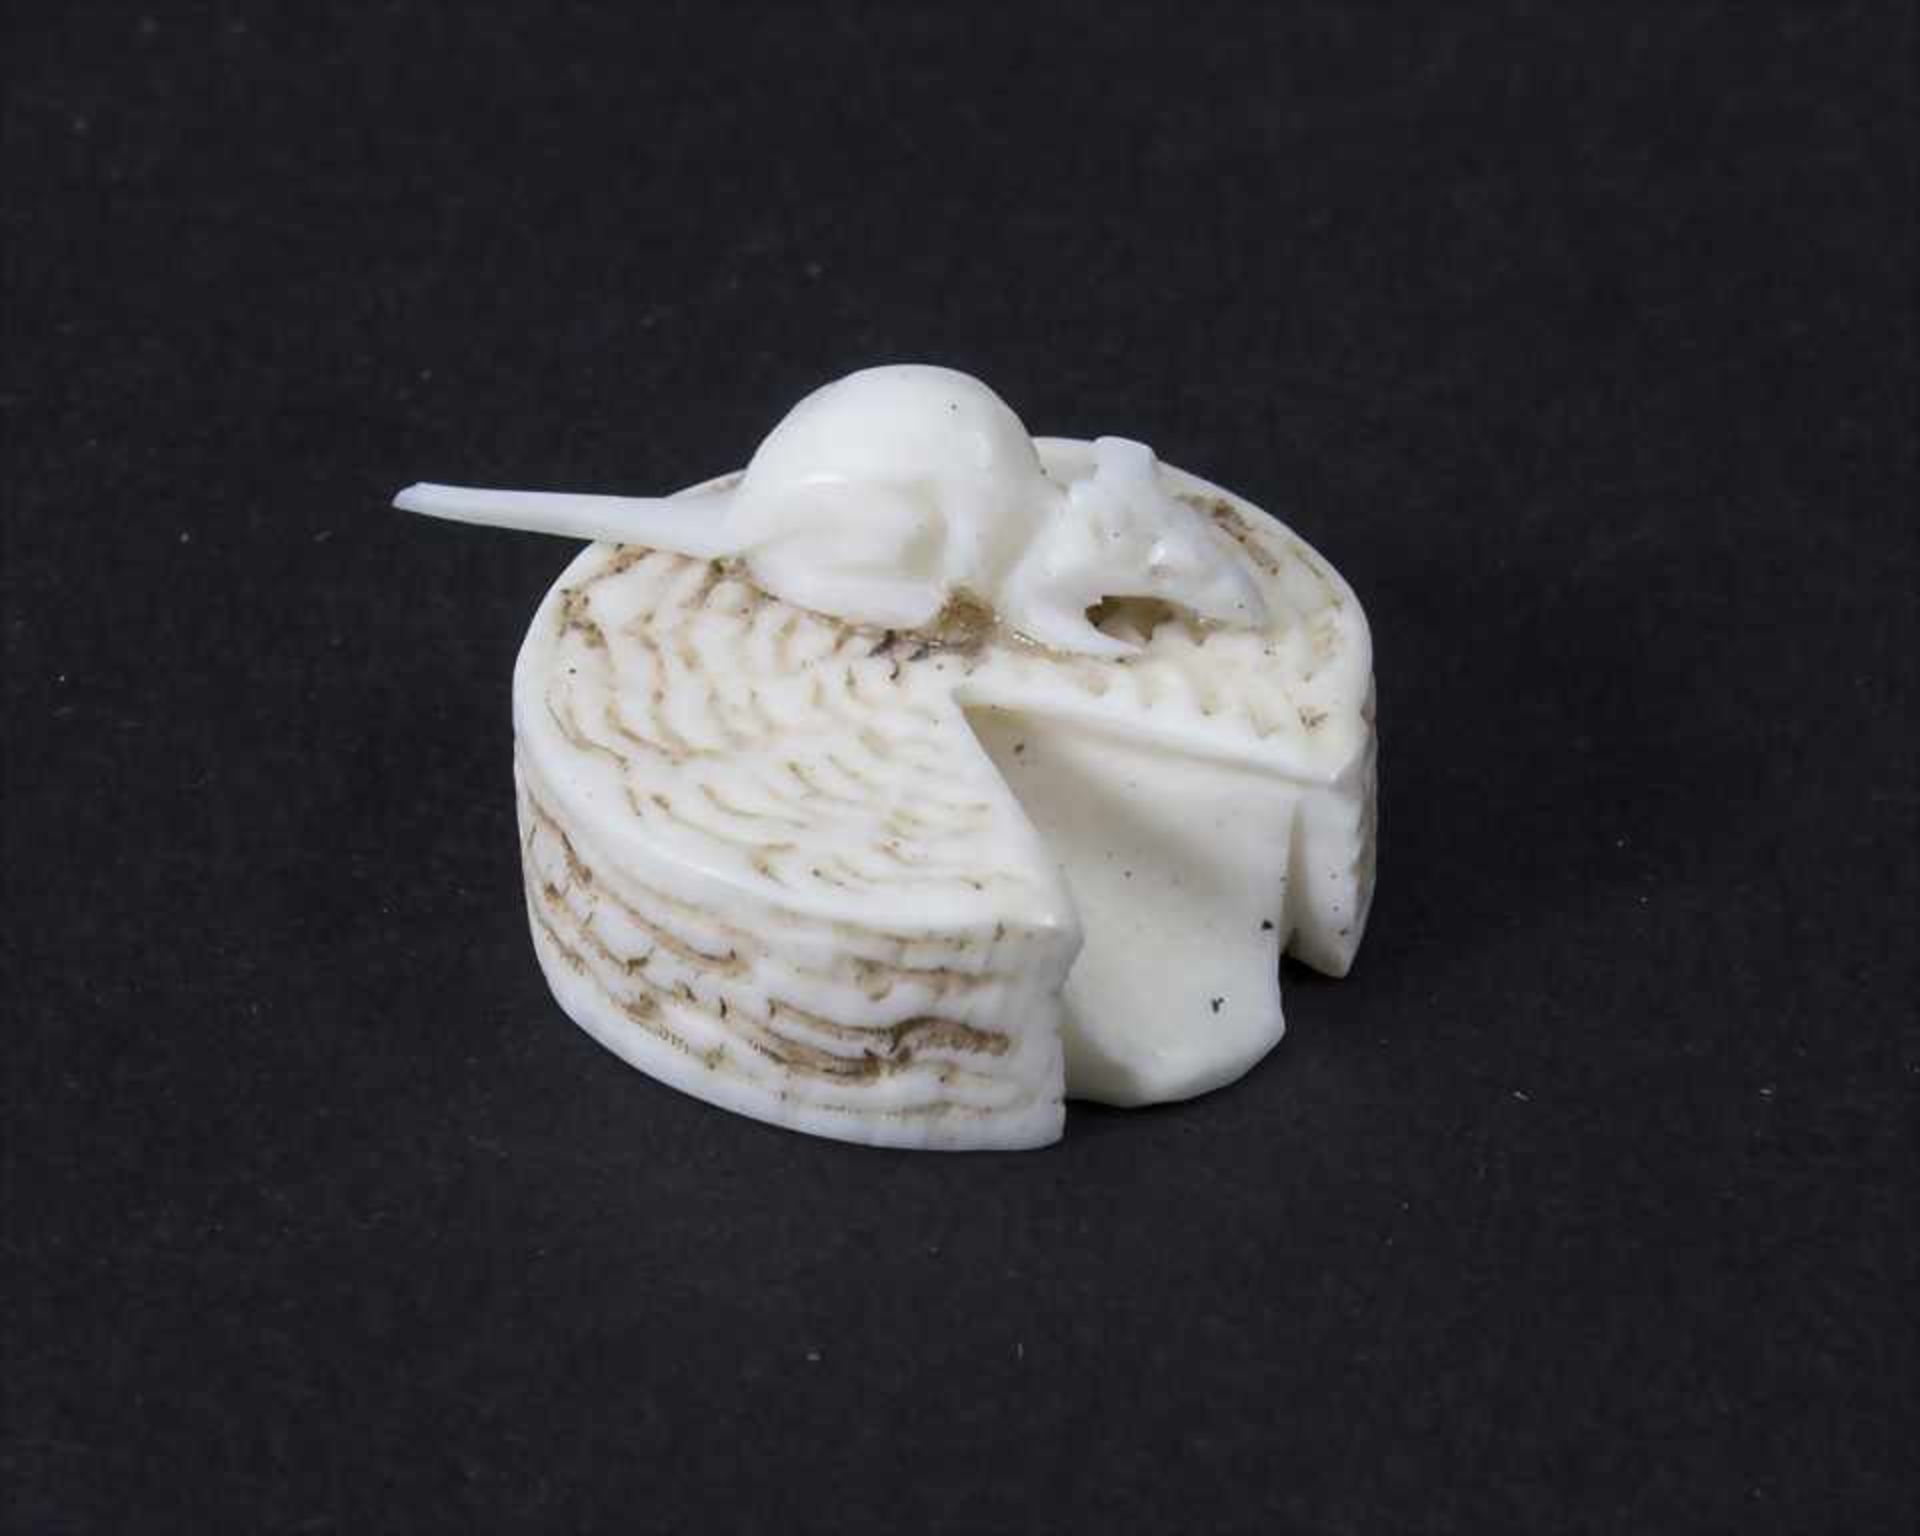 Miniatur Figur 'Maus auf einem Stück Käse' / An ivory miniature figure of a mouse on a piece of - Image 2 of 5